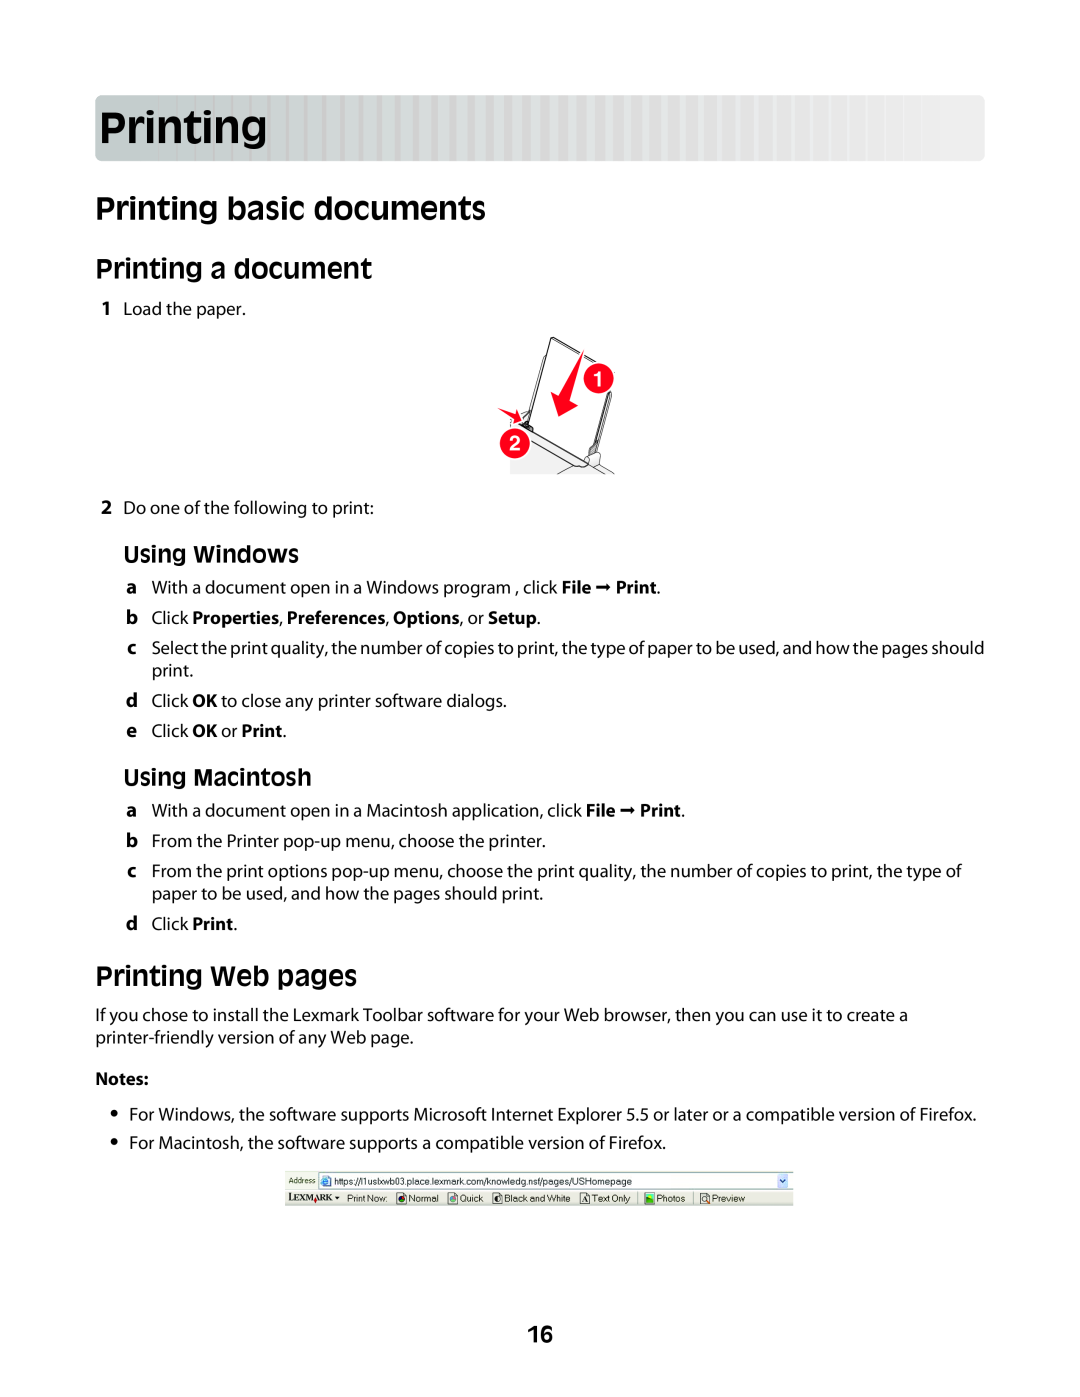 Lexmark Z2300 manual Printing basic documents, Printing a document, Printing Web pages, Using Windows, Using Macintosh 